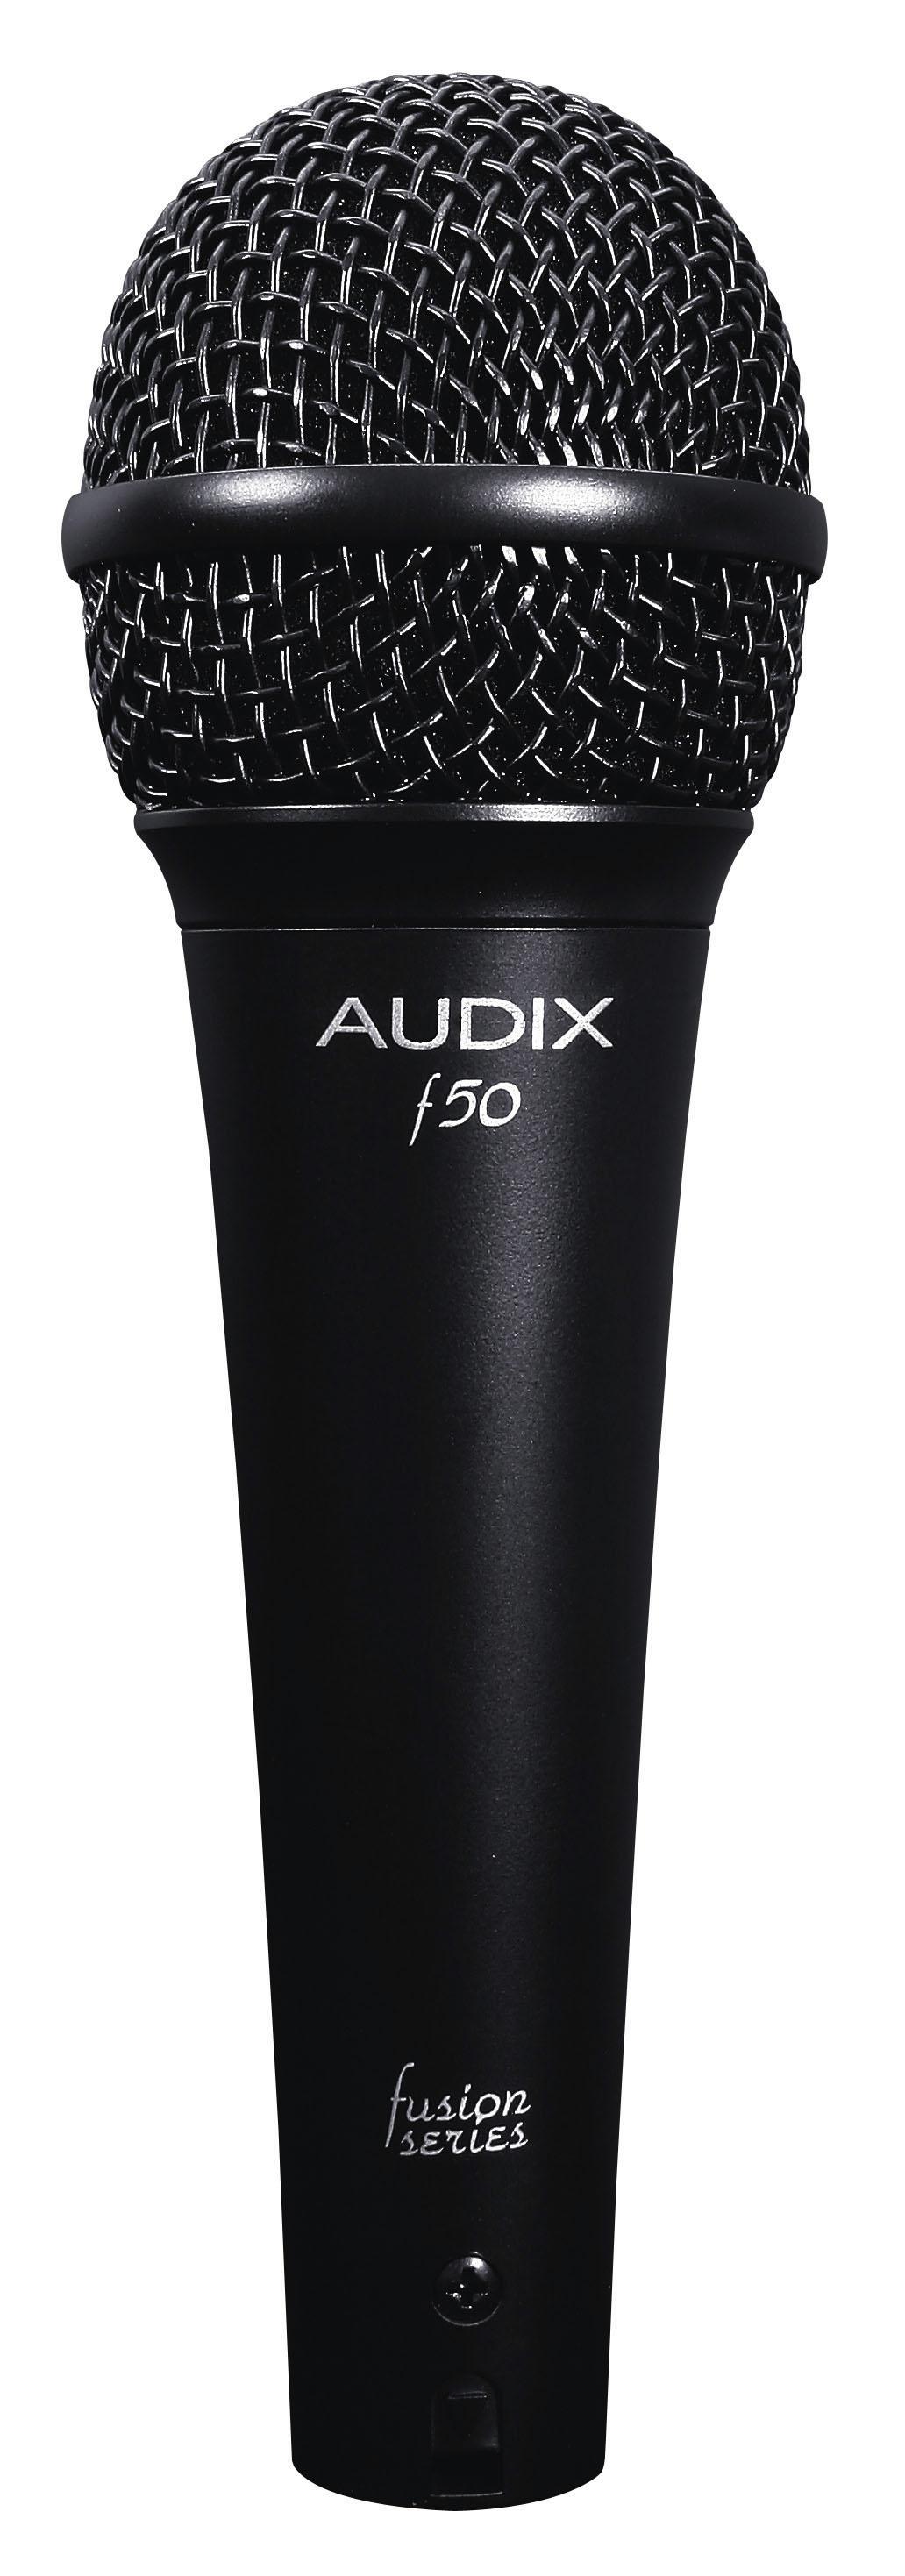 Audix - F50_32